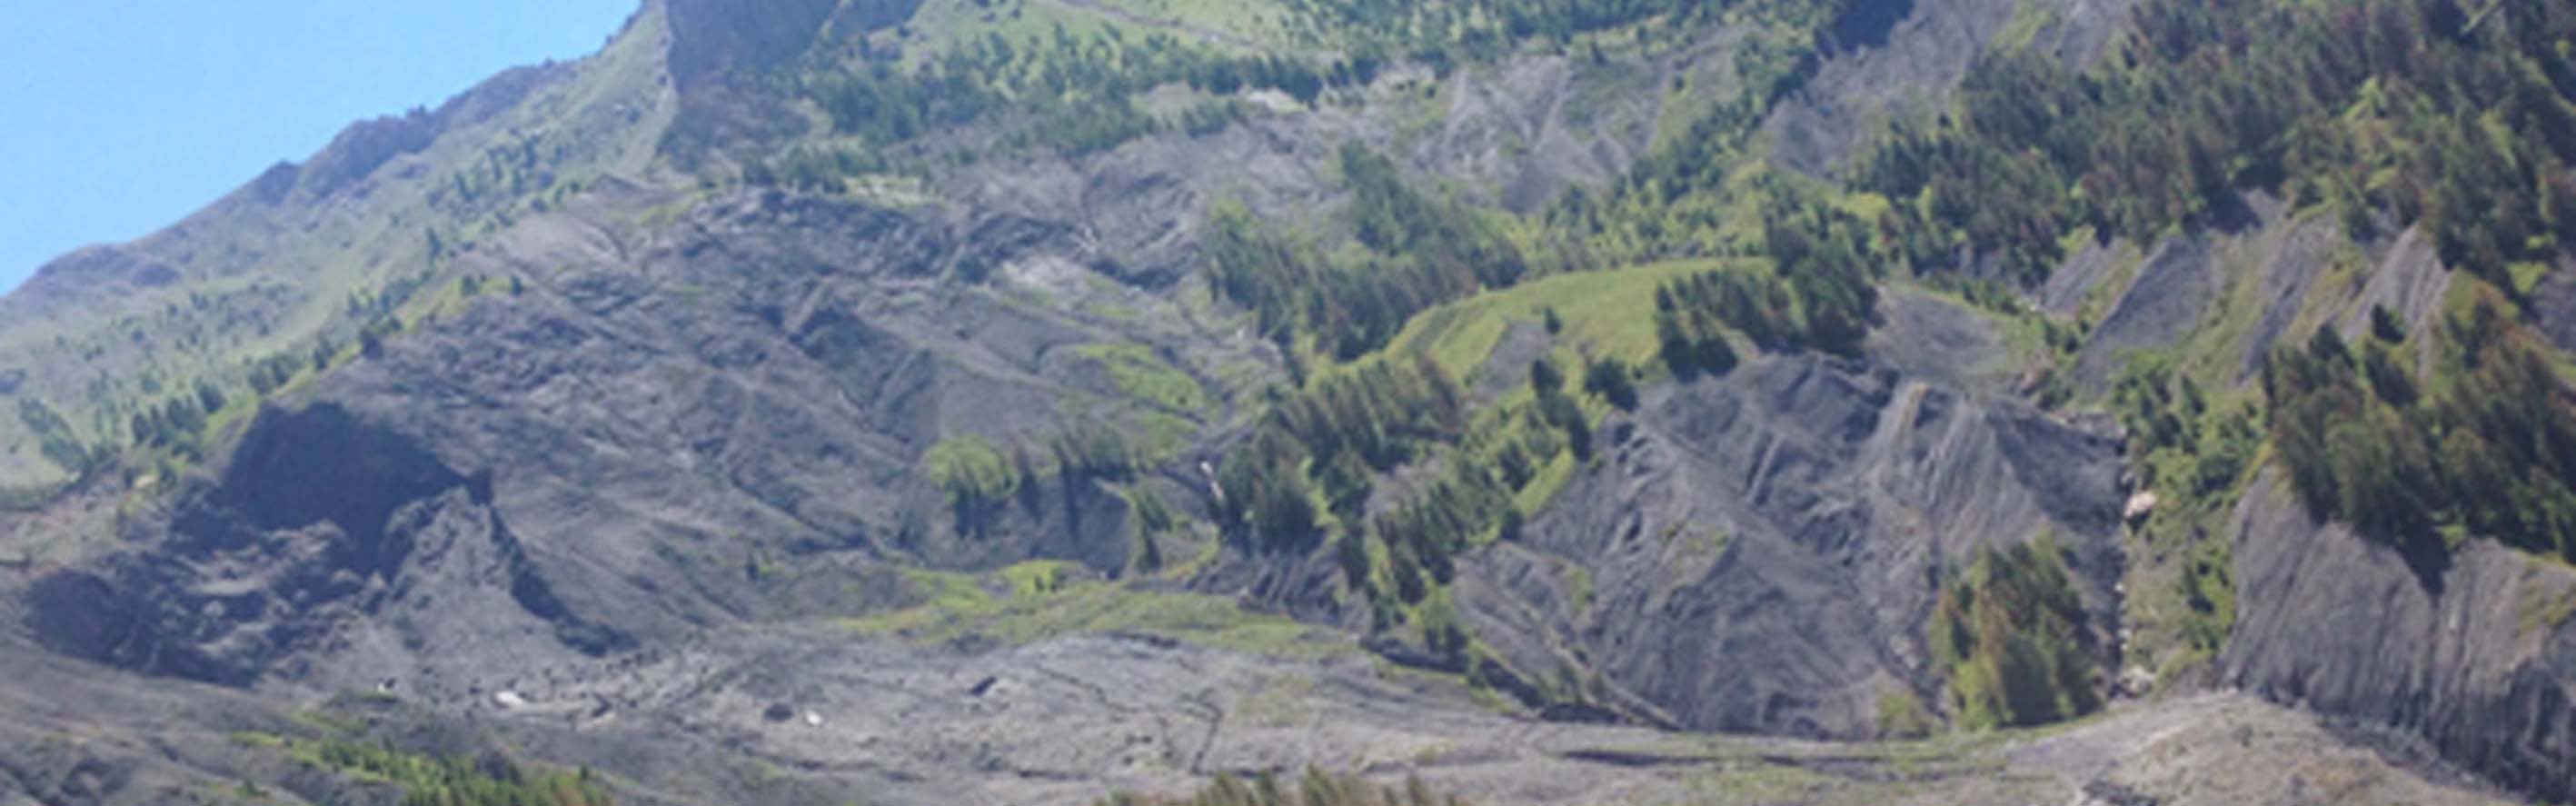 Super-Sauze landslide: view of the landslide and the Sauze catchment in 2016